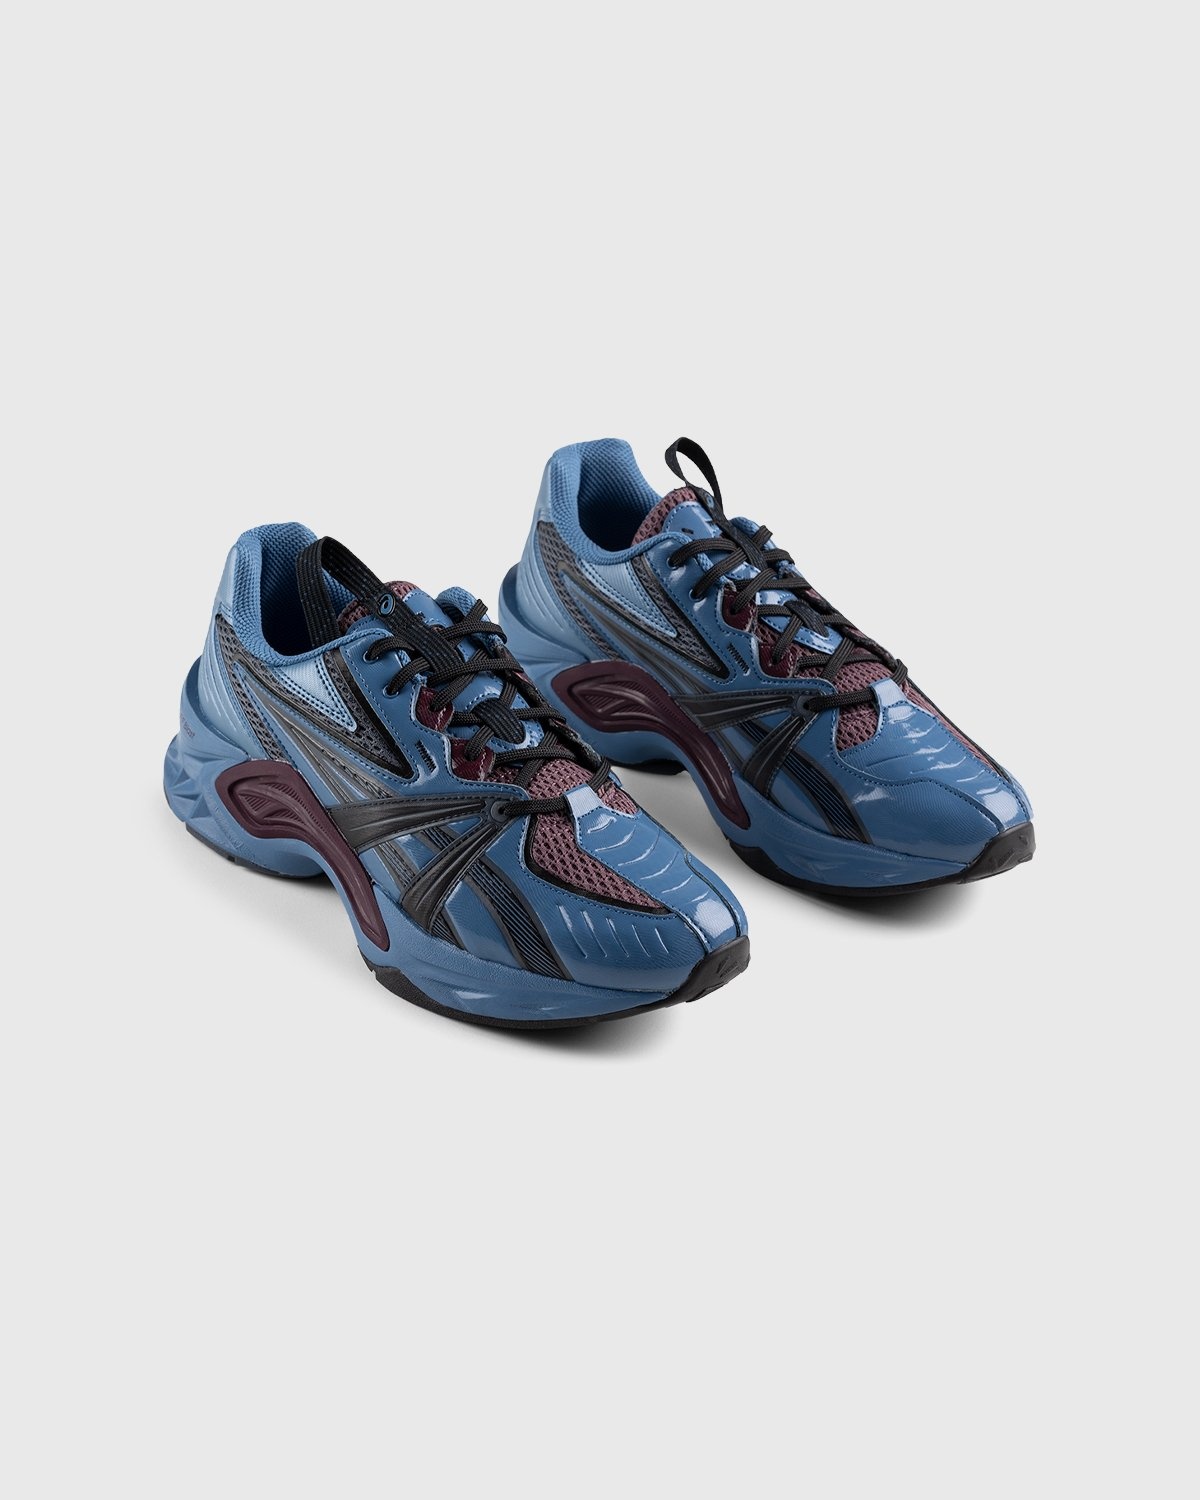 asics – HN2-S Protoblast Azure/Black - Low Top Sneakers - Blue - Image 4